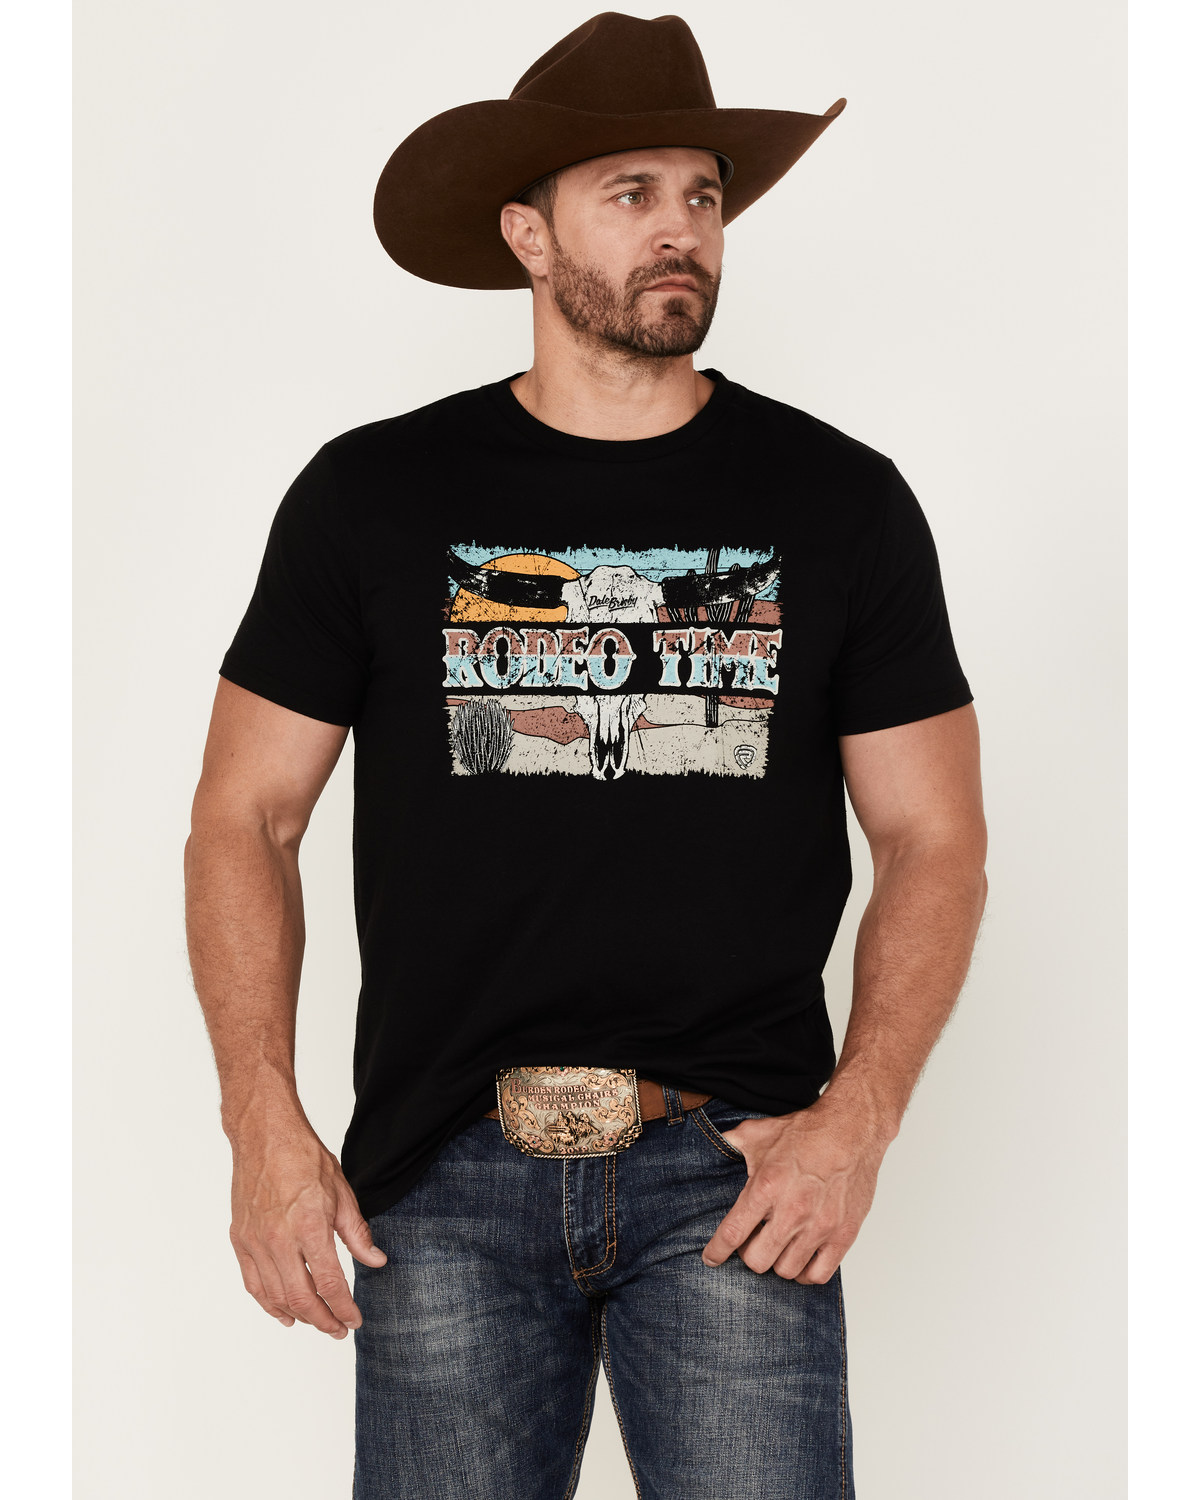 Dale Brisby Men's Rodeo Time Steerhead Skull Desert Graphic Short Sleeve T-Shirt